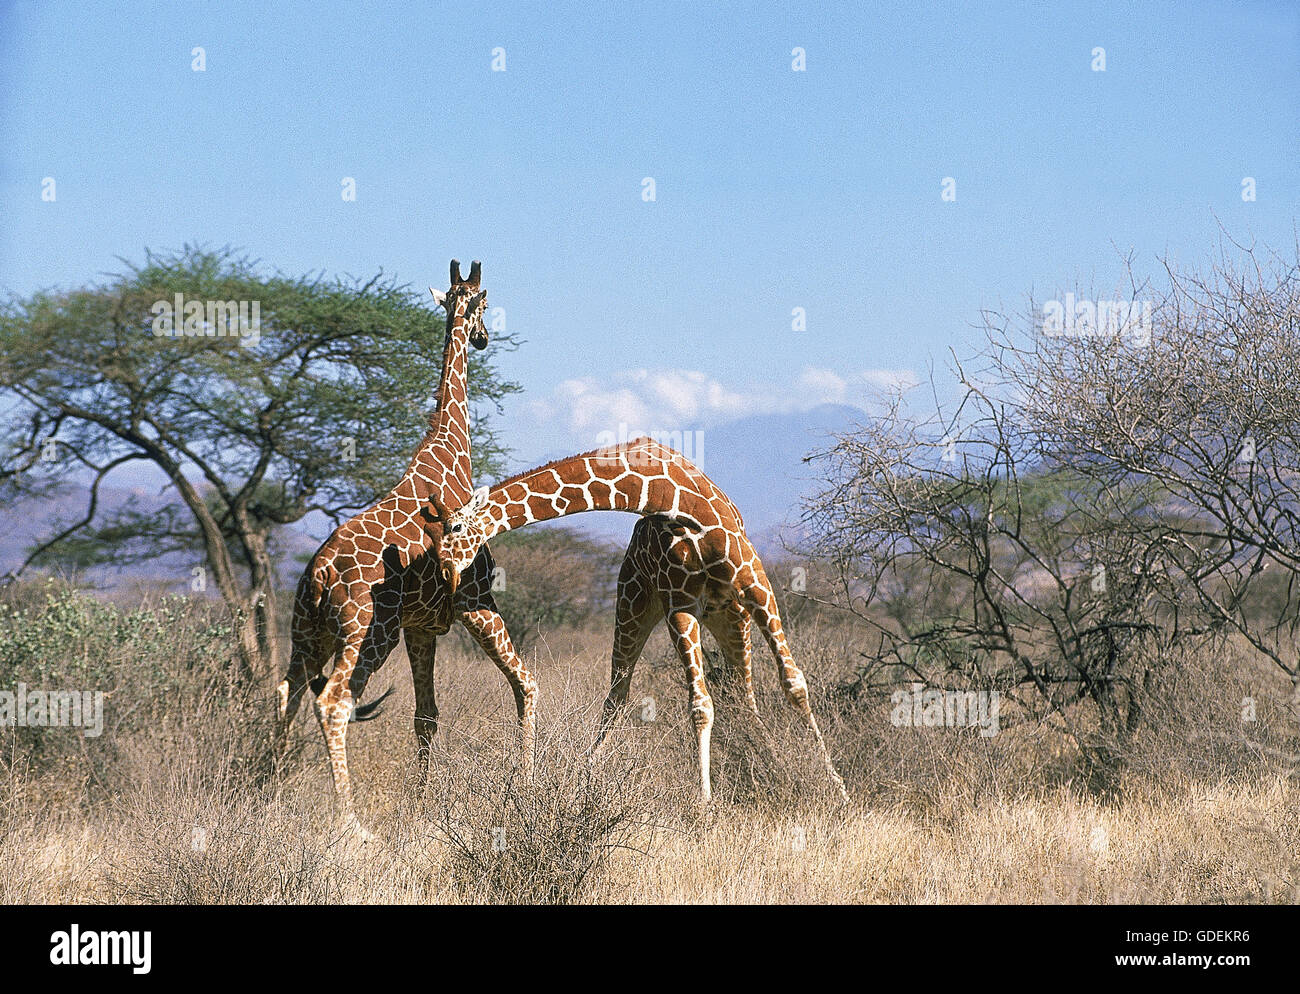 RETICULATED GIRAFFE giraffa camelopardalis reticulata, MALES FIGHTING, SAMBURU PARK IN KENYA Stock Photo